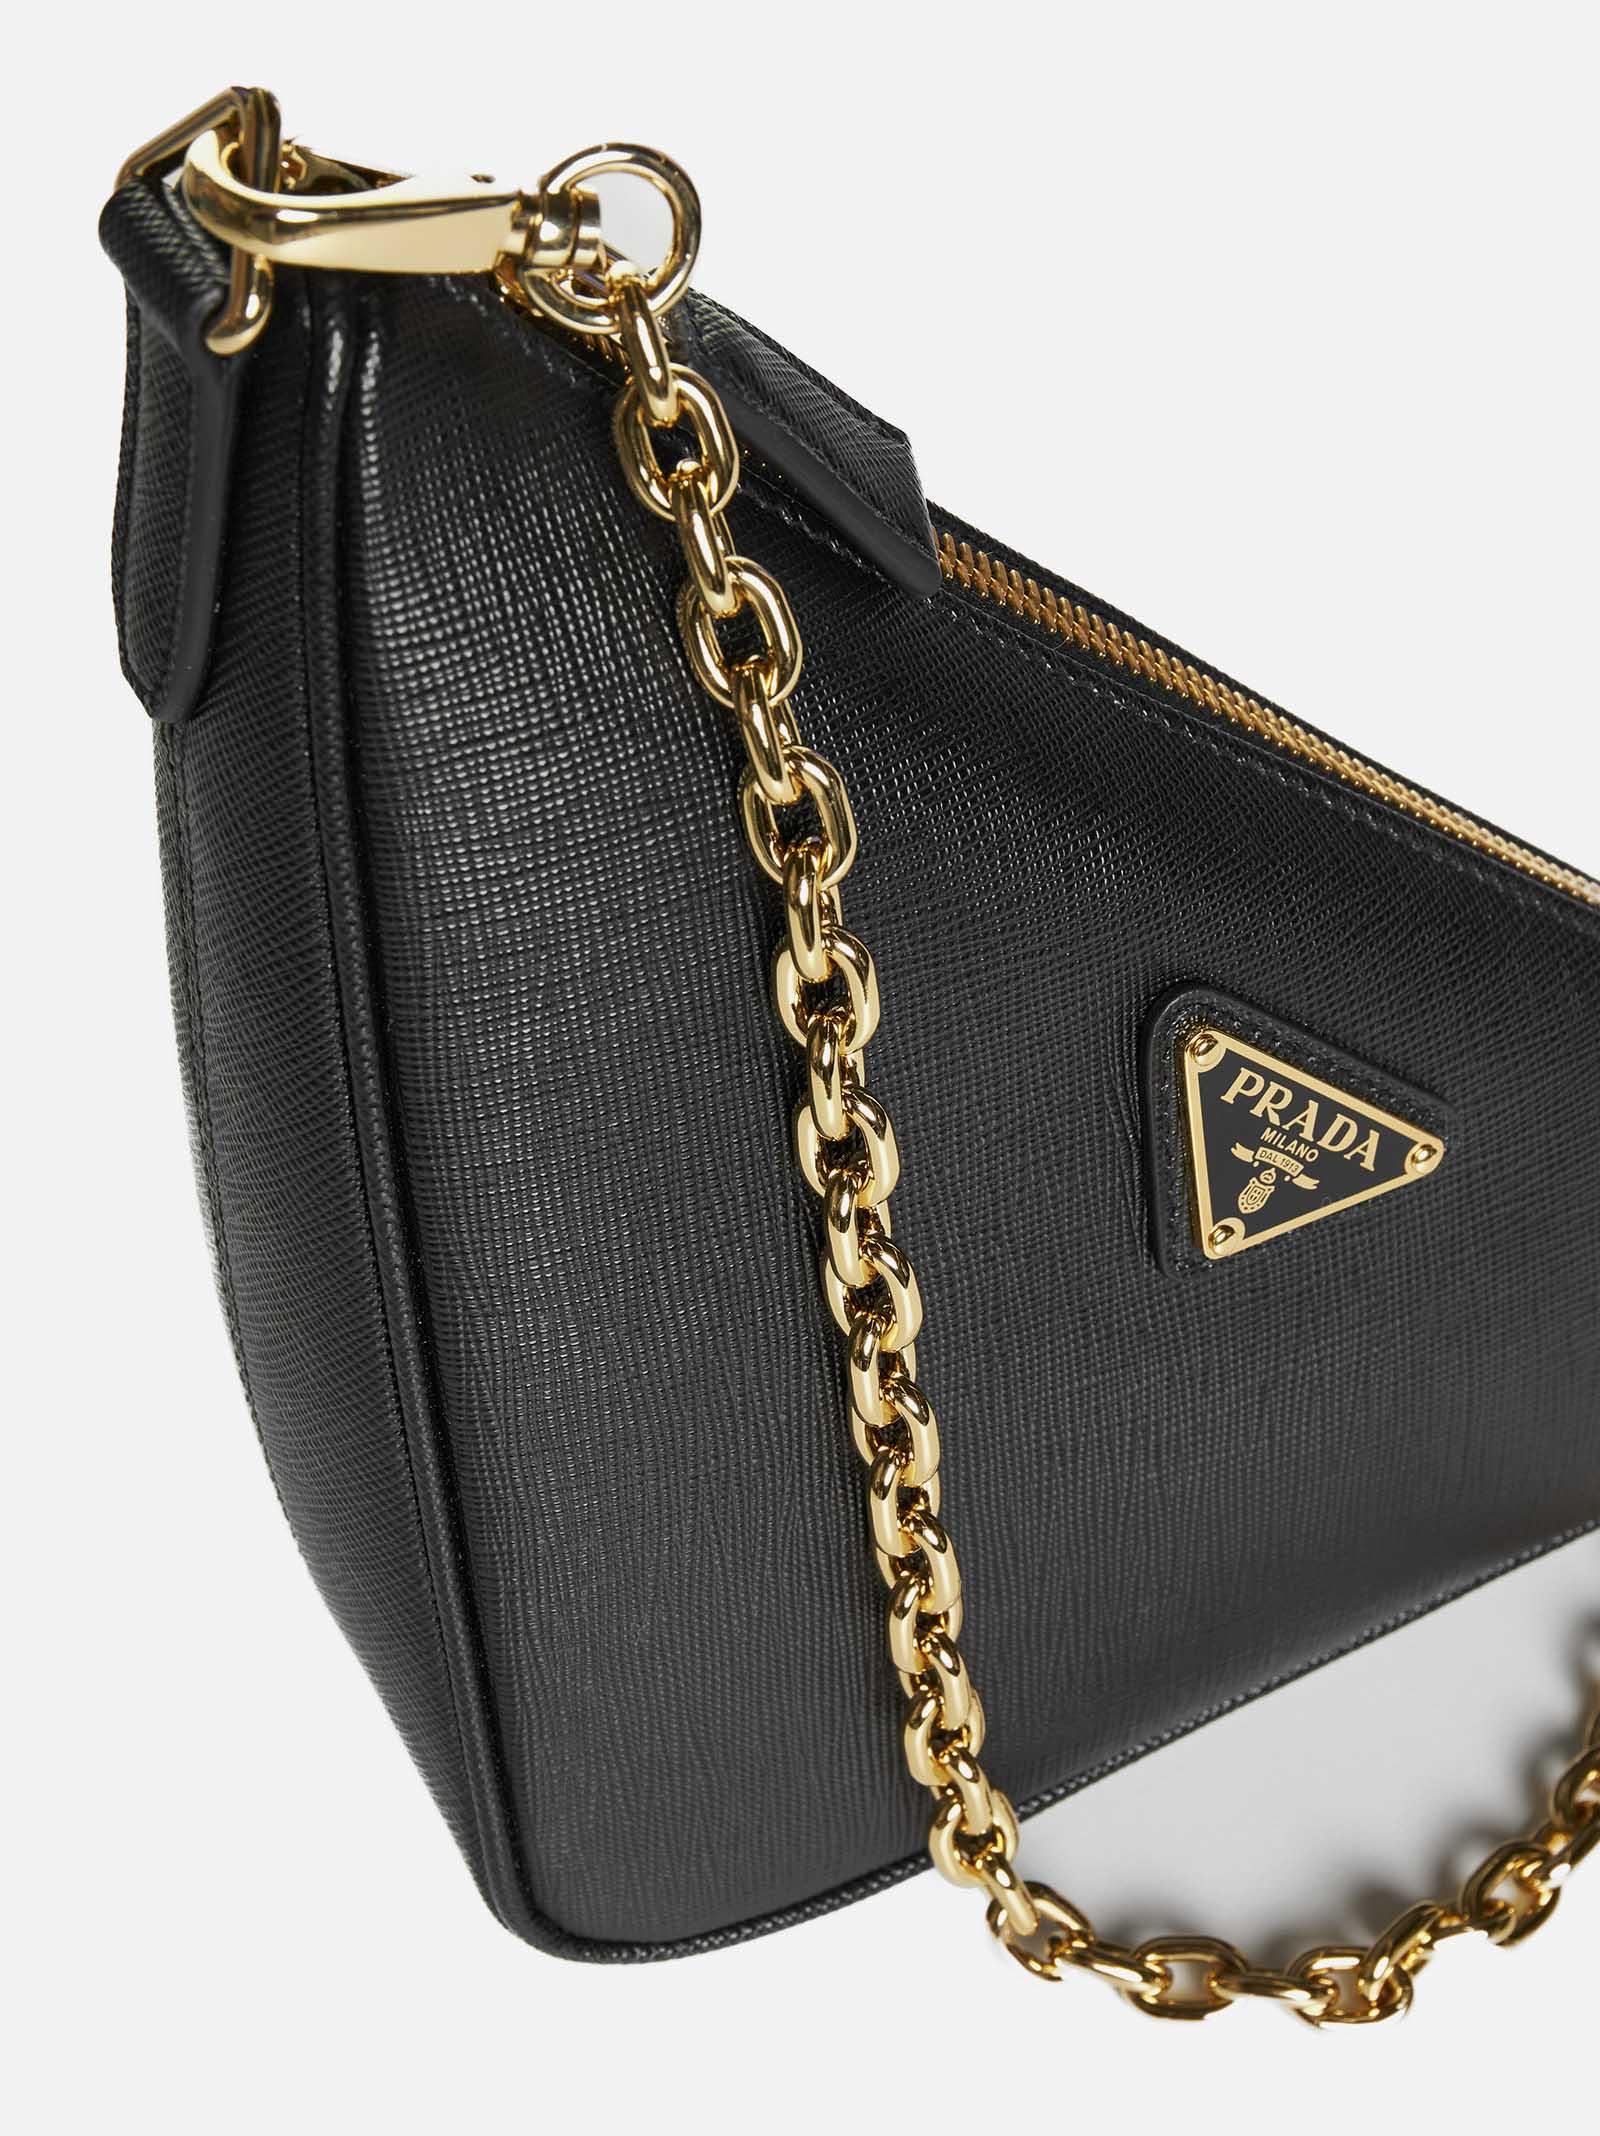 Prada Saffiano Leather Crossbody Mini Black in Leather with Gold